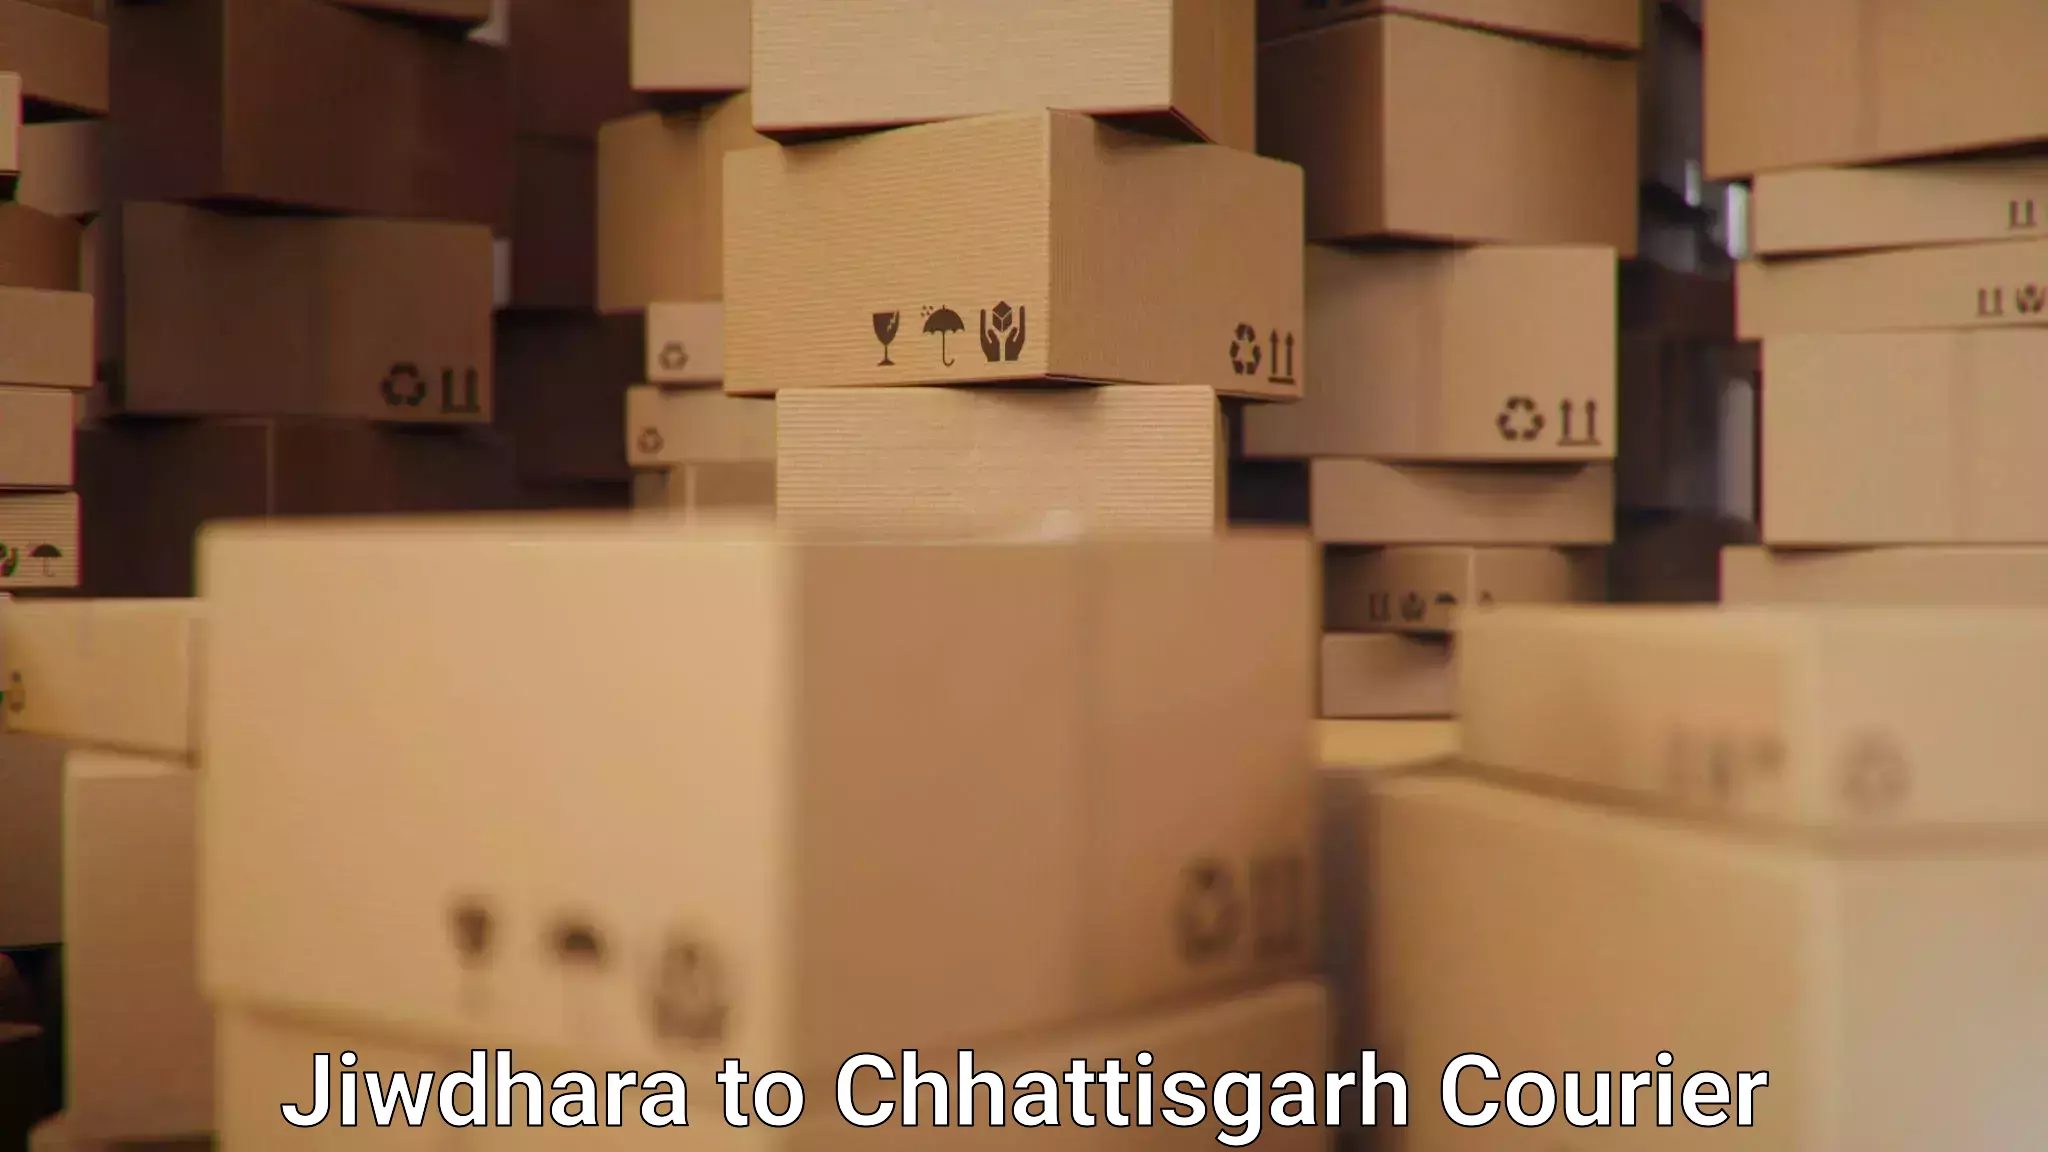 Courier service innovation Jiwdhara to Pithora